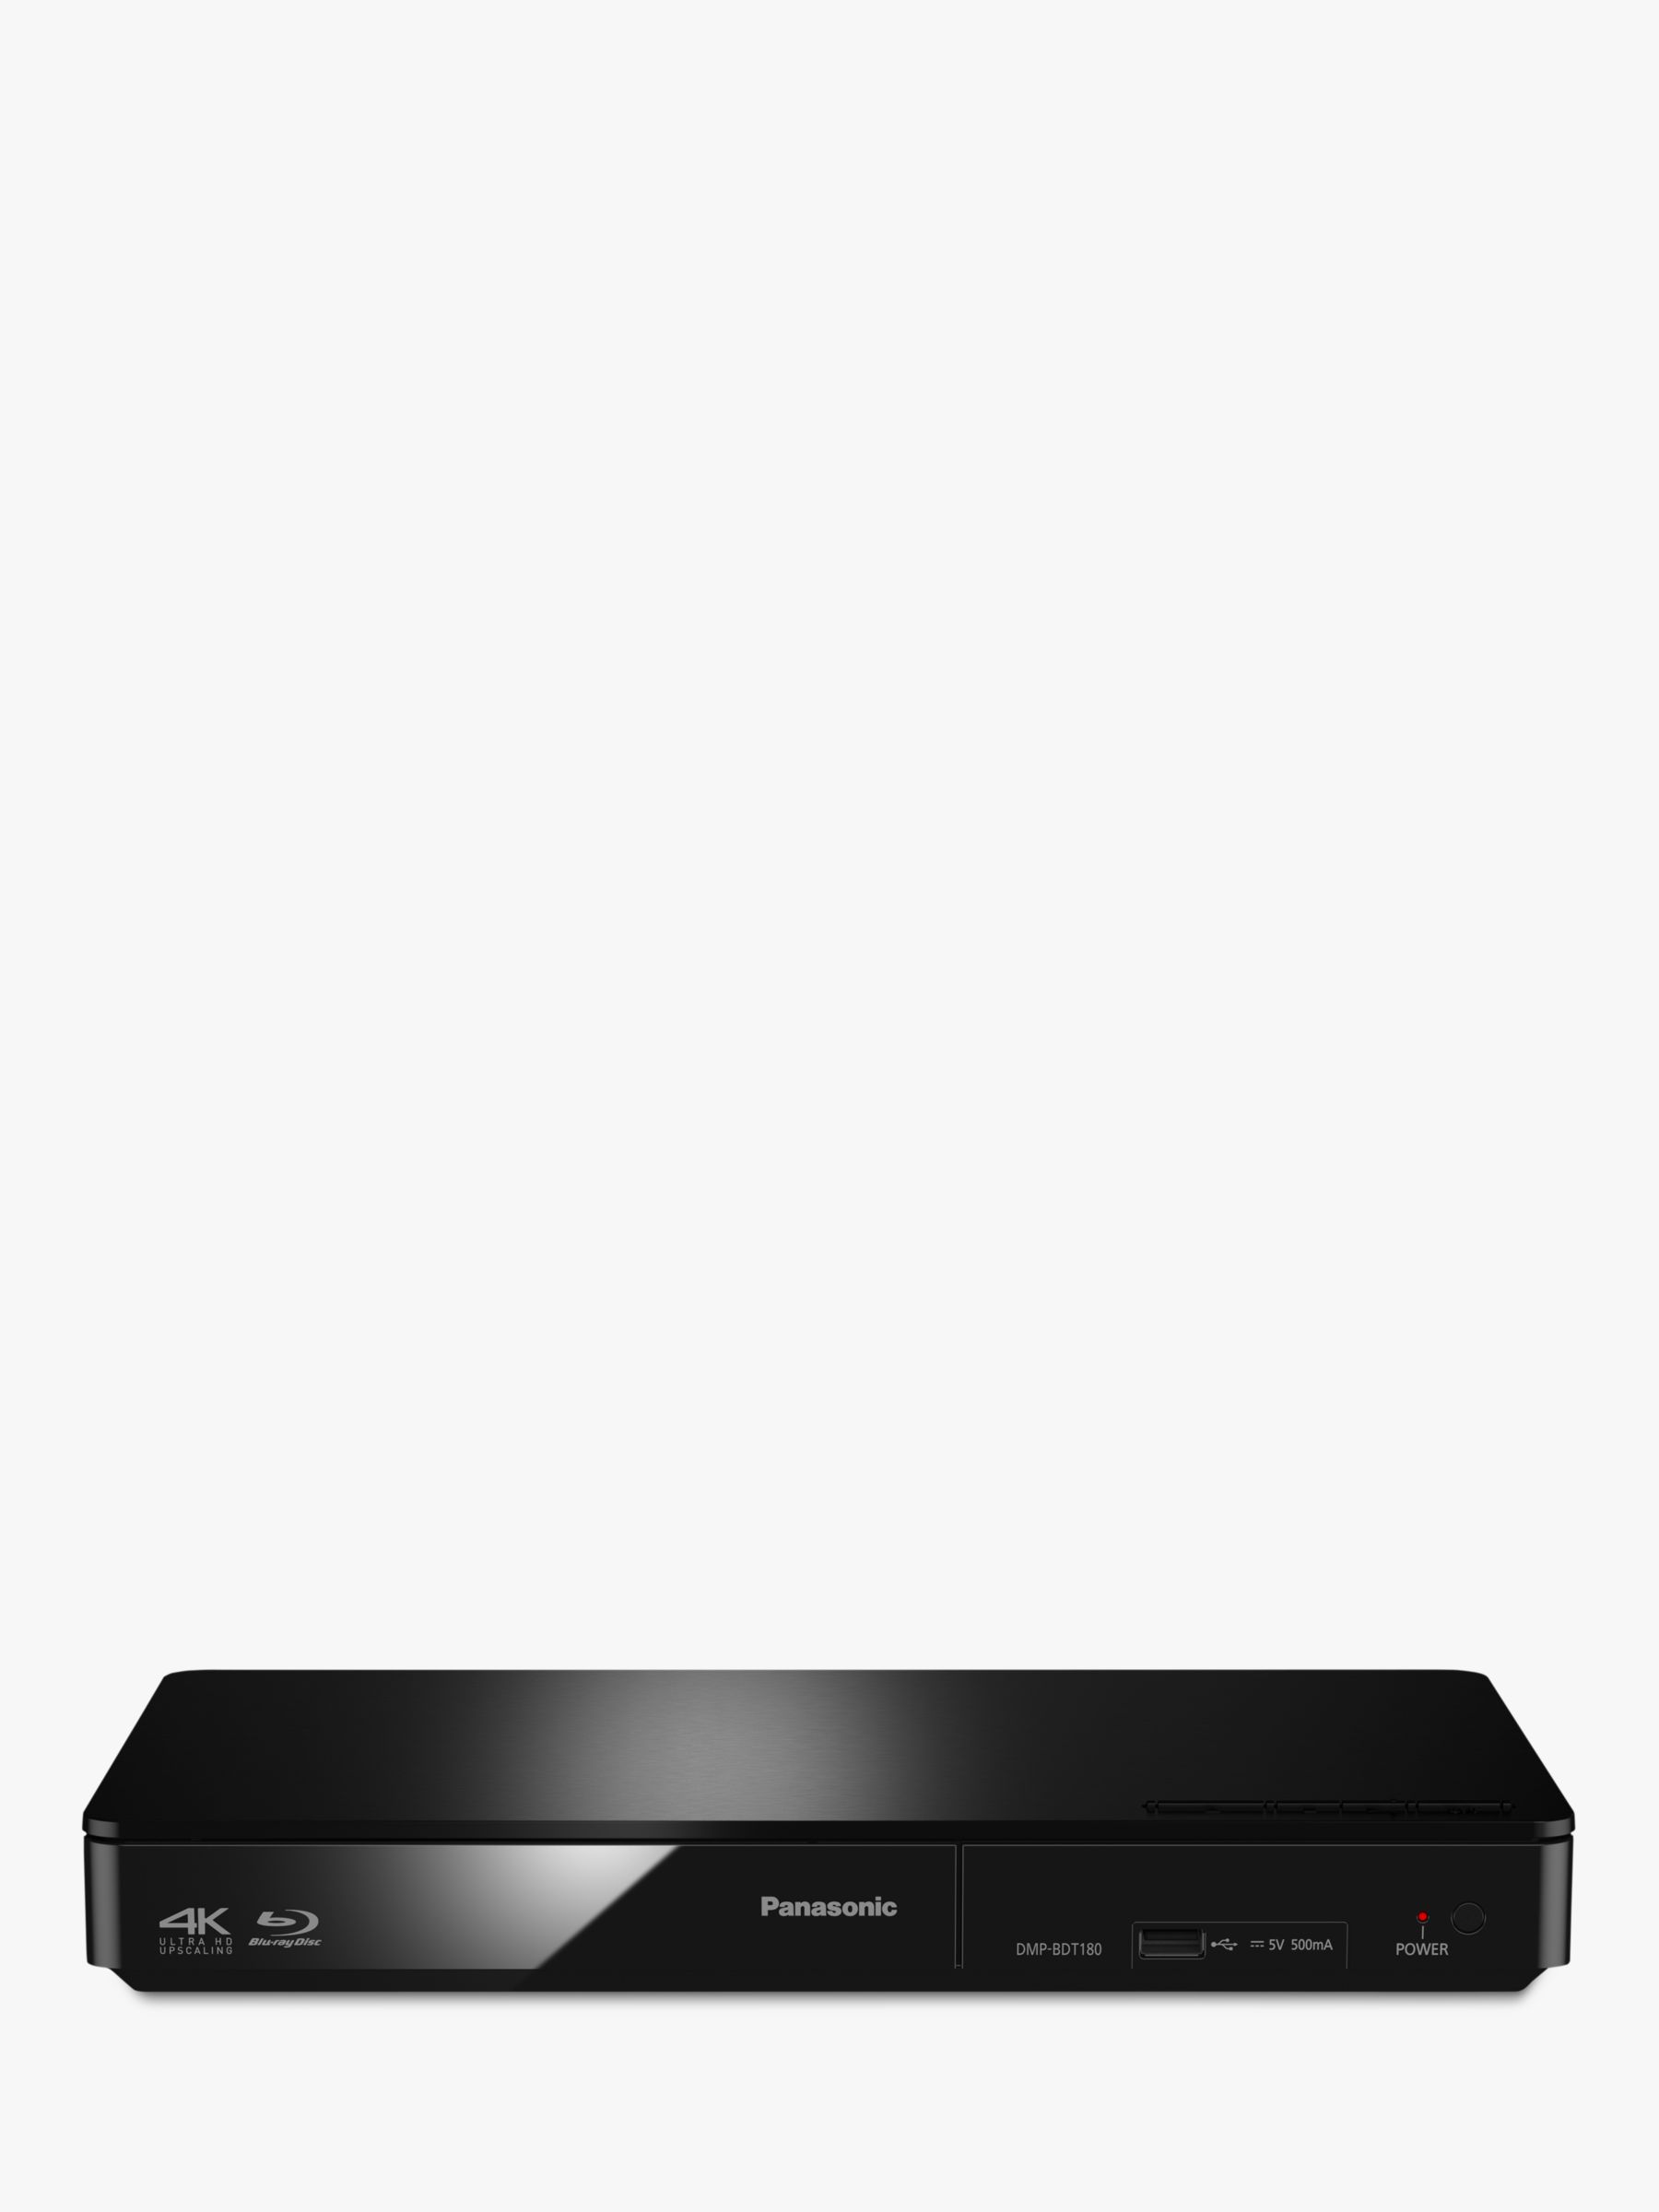 Panasonic Dmp Bdt180eb Smart Network 3d 4k Upscaling Blu Raydvd Player